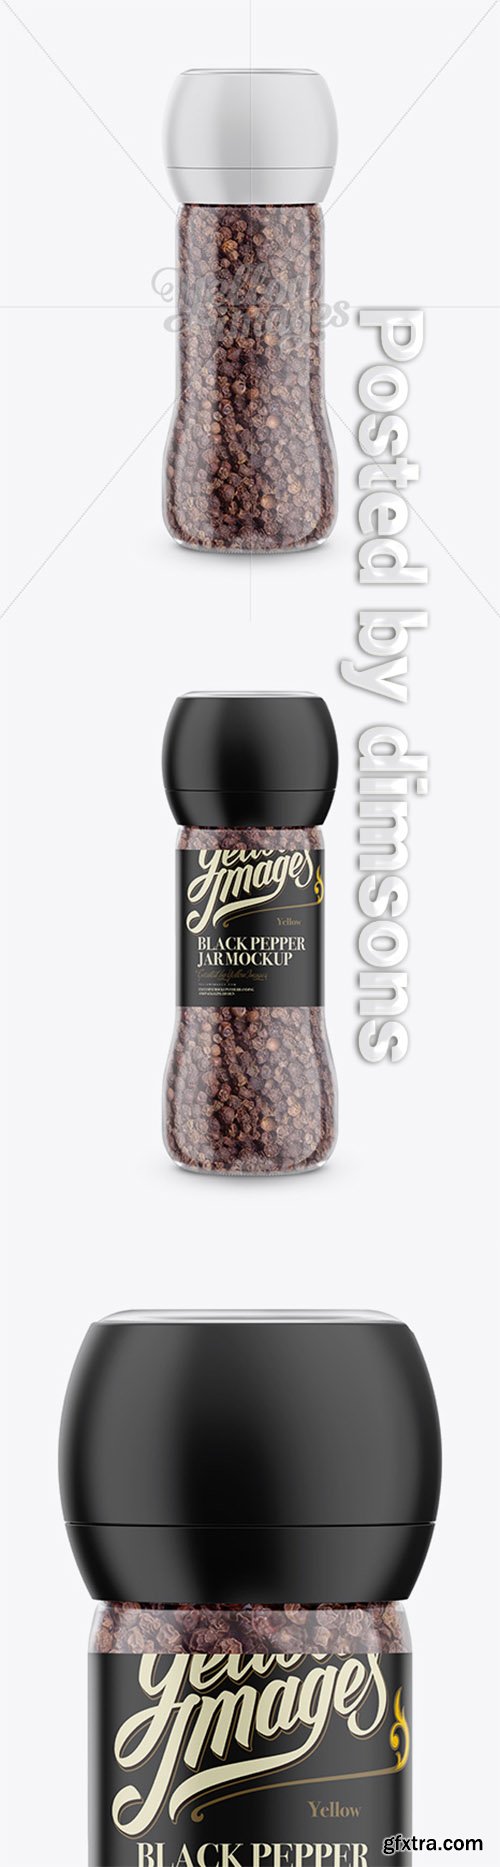 Black Pepper Jar Mockup 15505